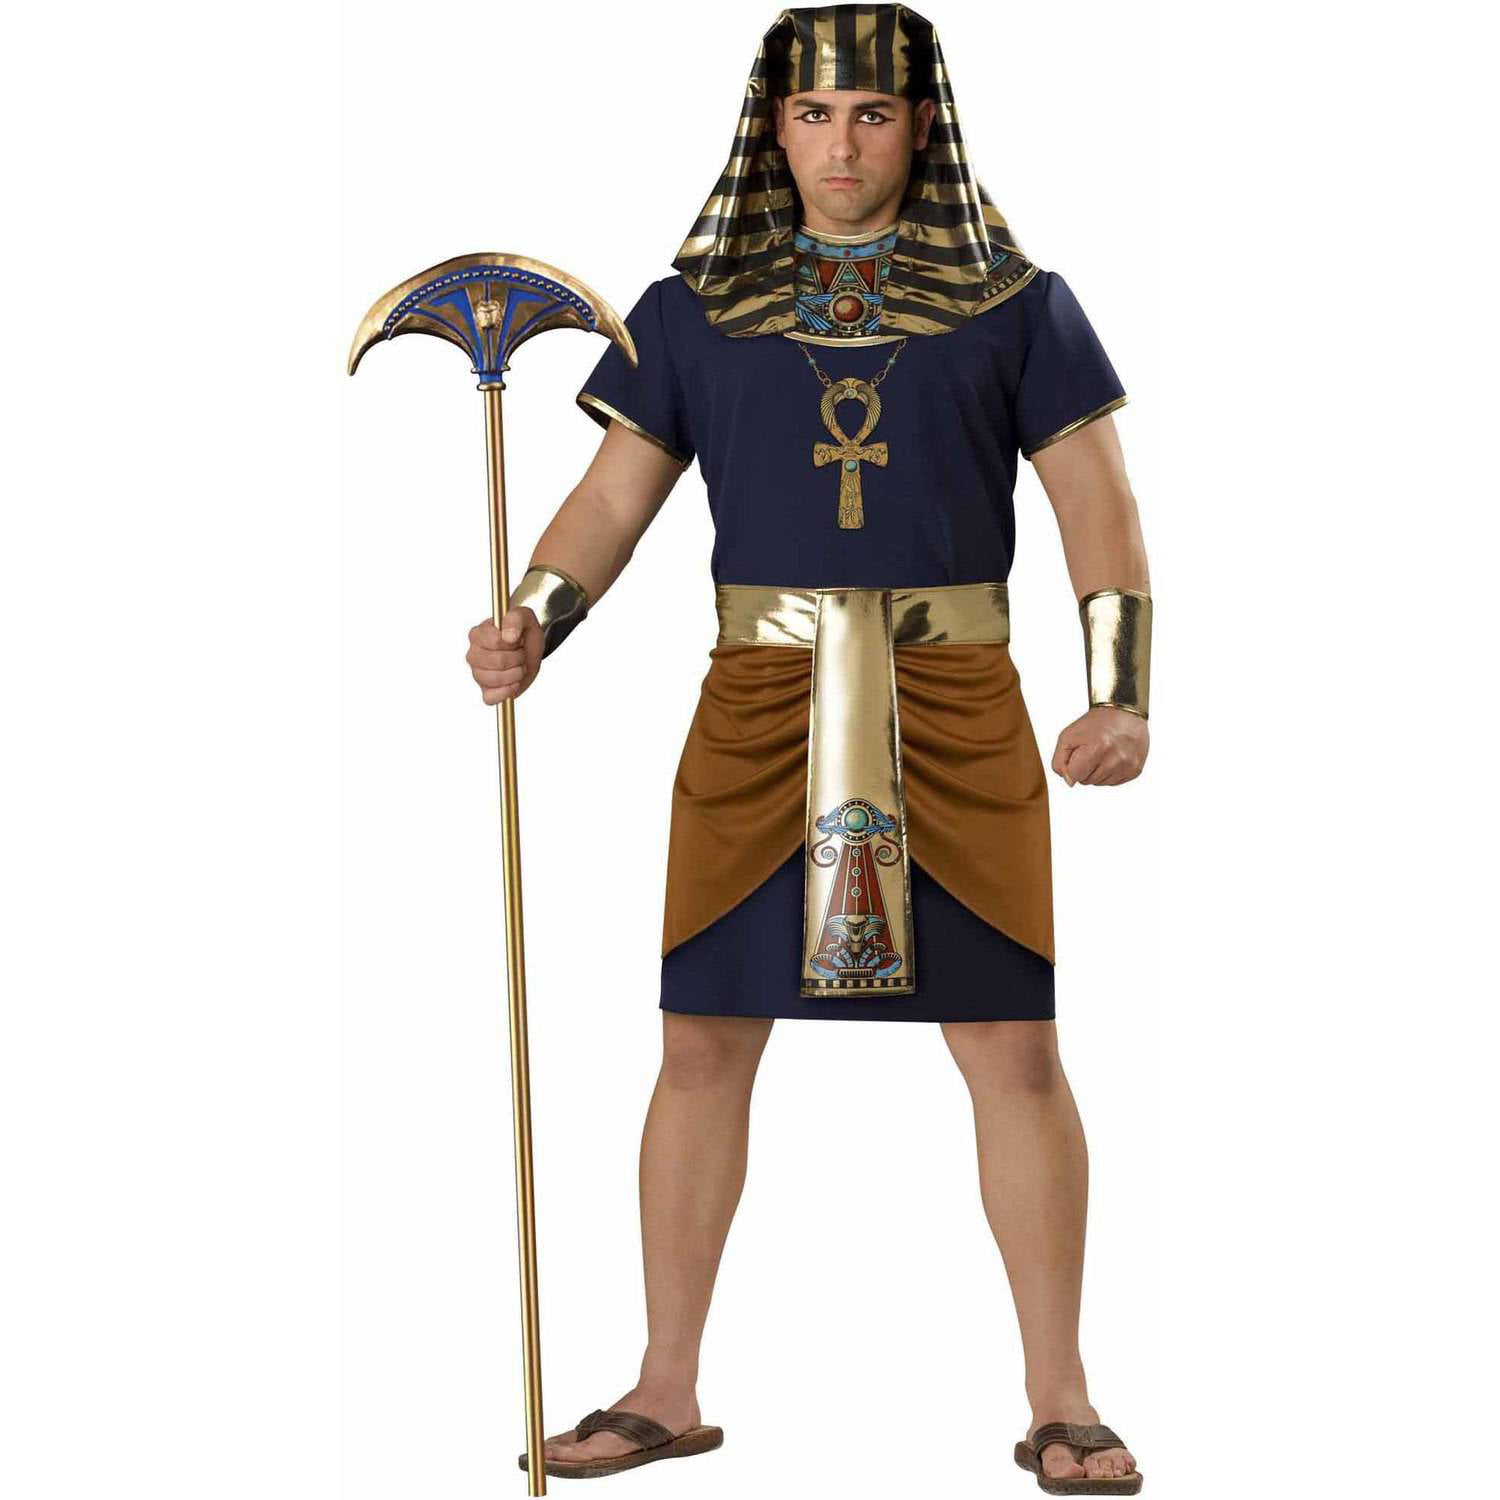 Egyptian Man Plus Size Men's Adult Halloween Costume - Walmart.com